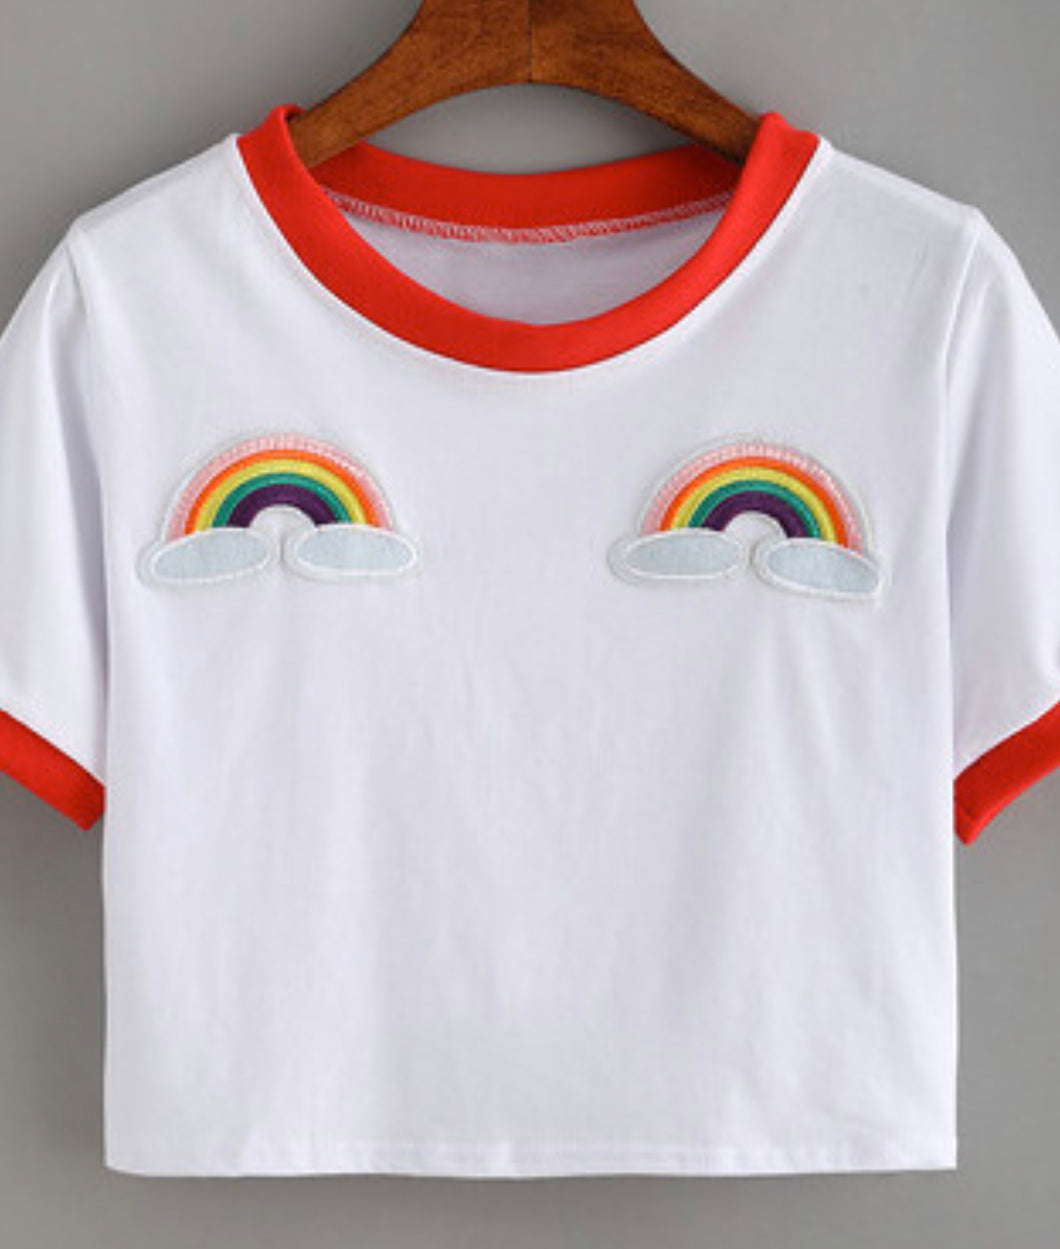 Rainbow Ringer Crop Top Tee Shirt